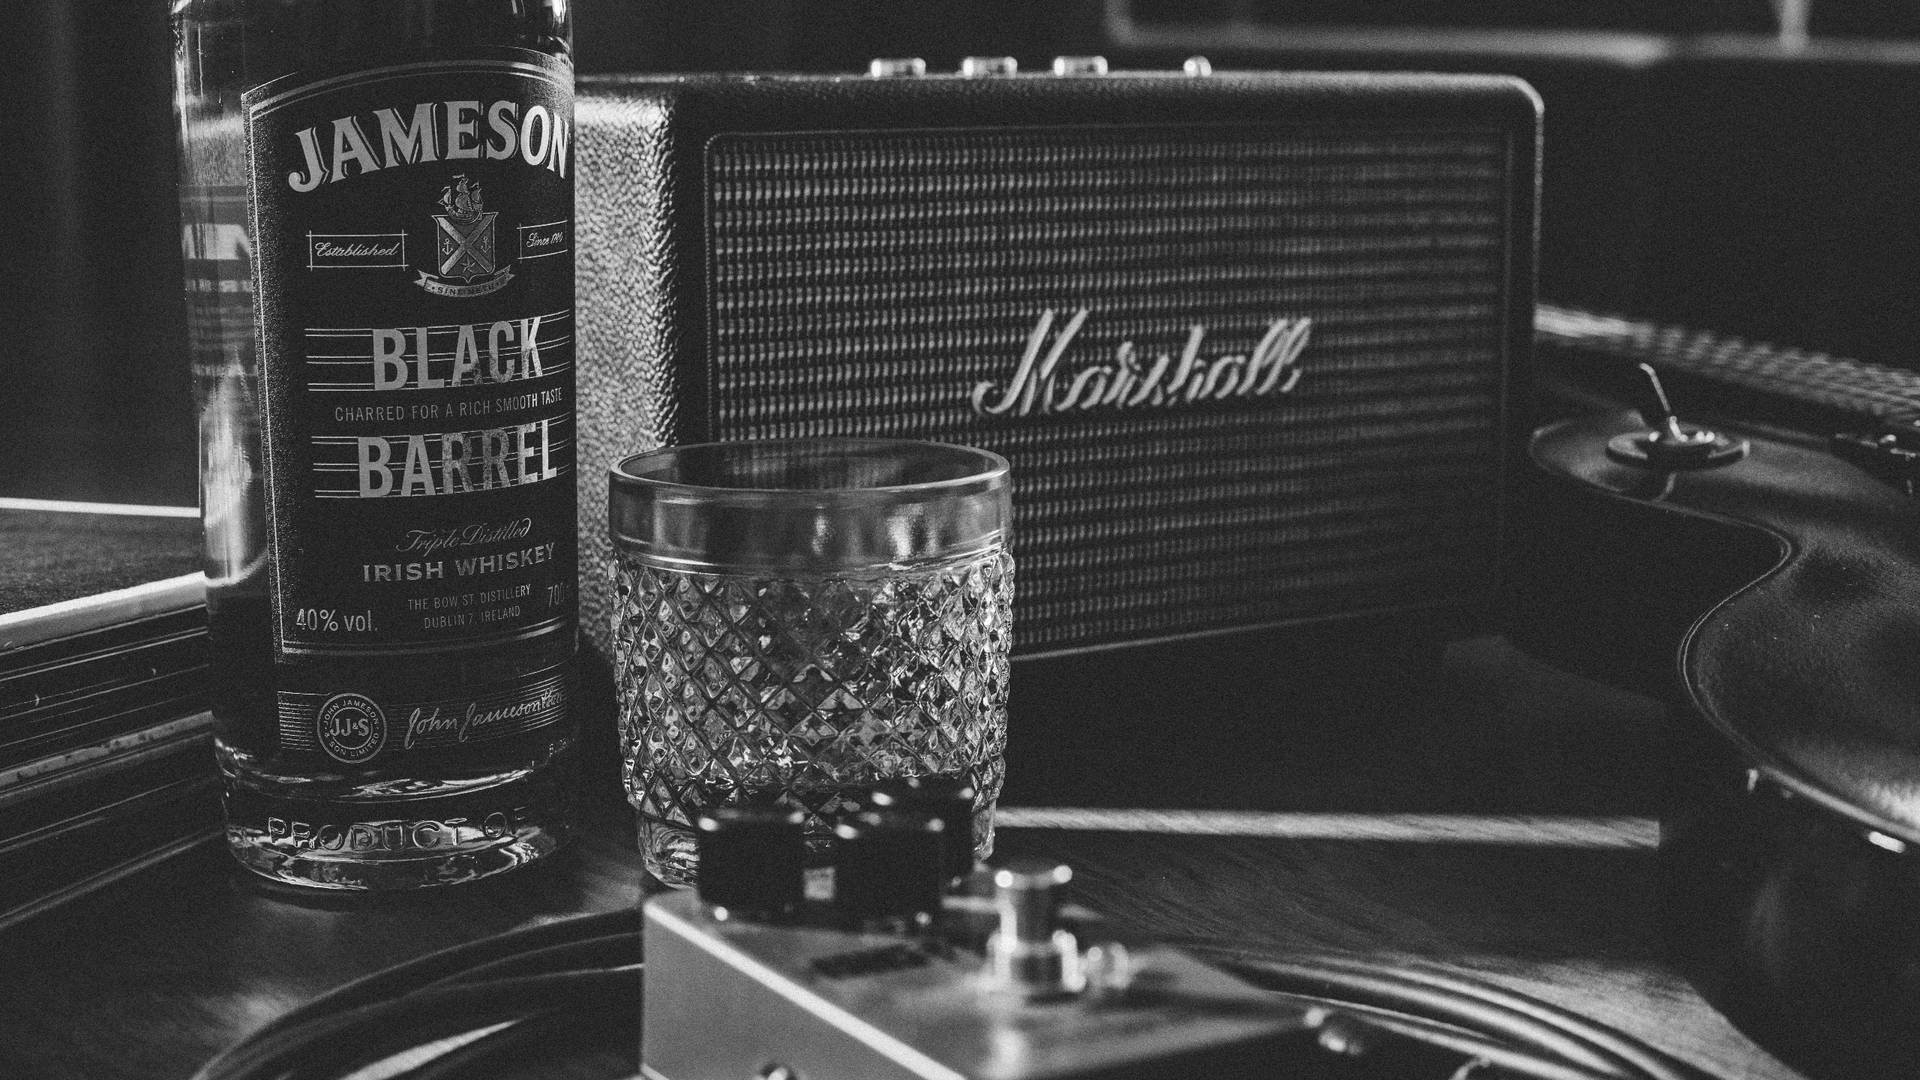 Marshall Speaker With Jameson Whiskey Background